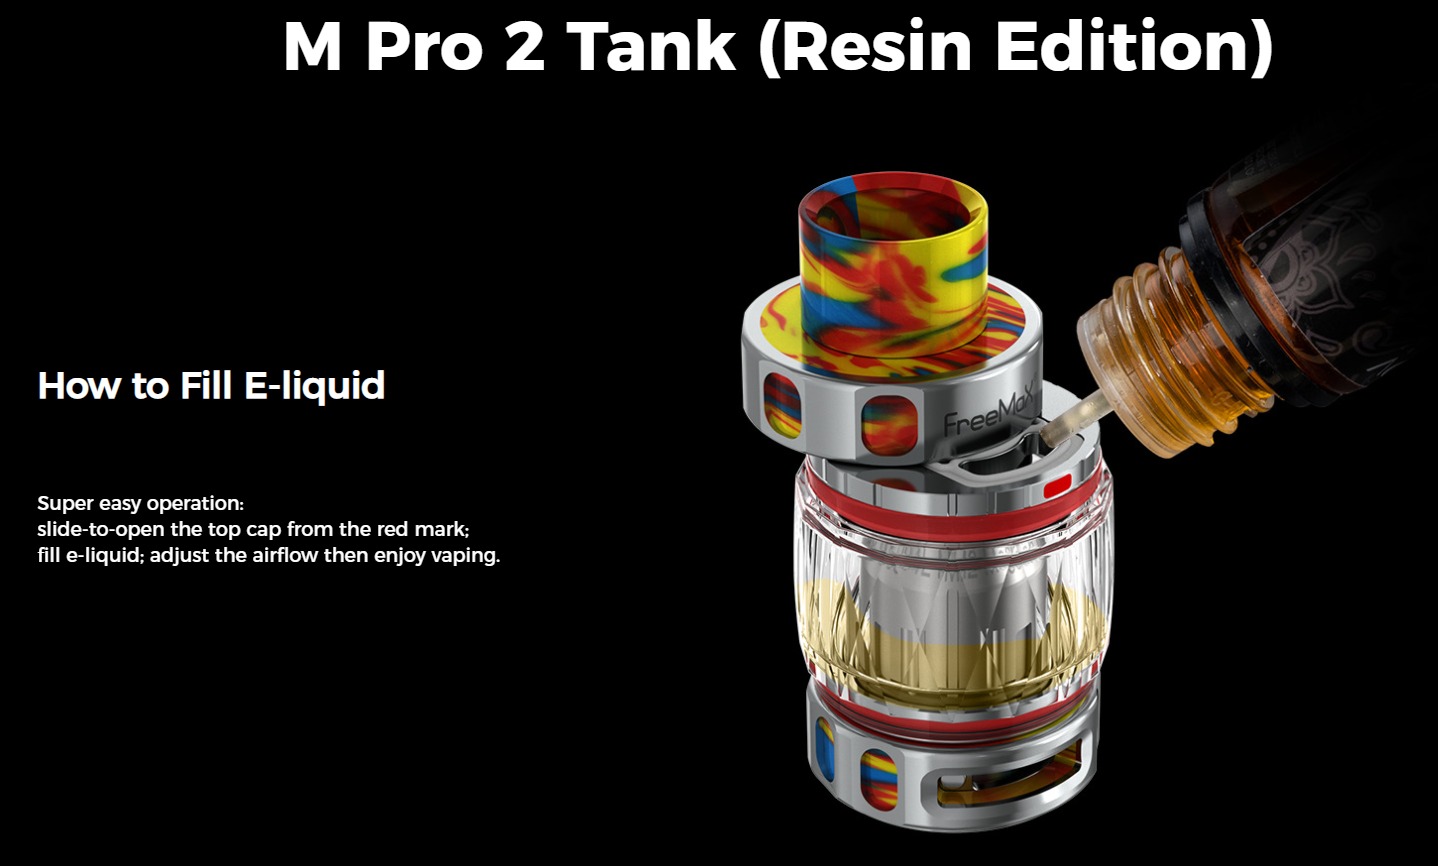 M Pro 2 Tank Resin Edition Fill System